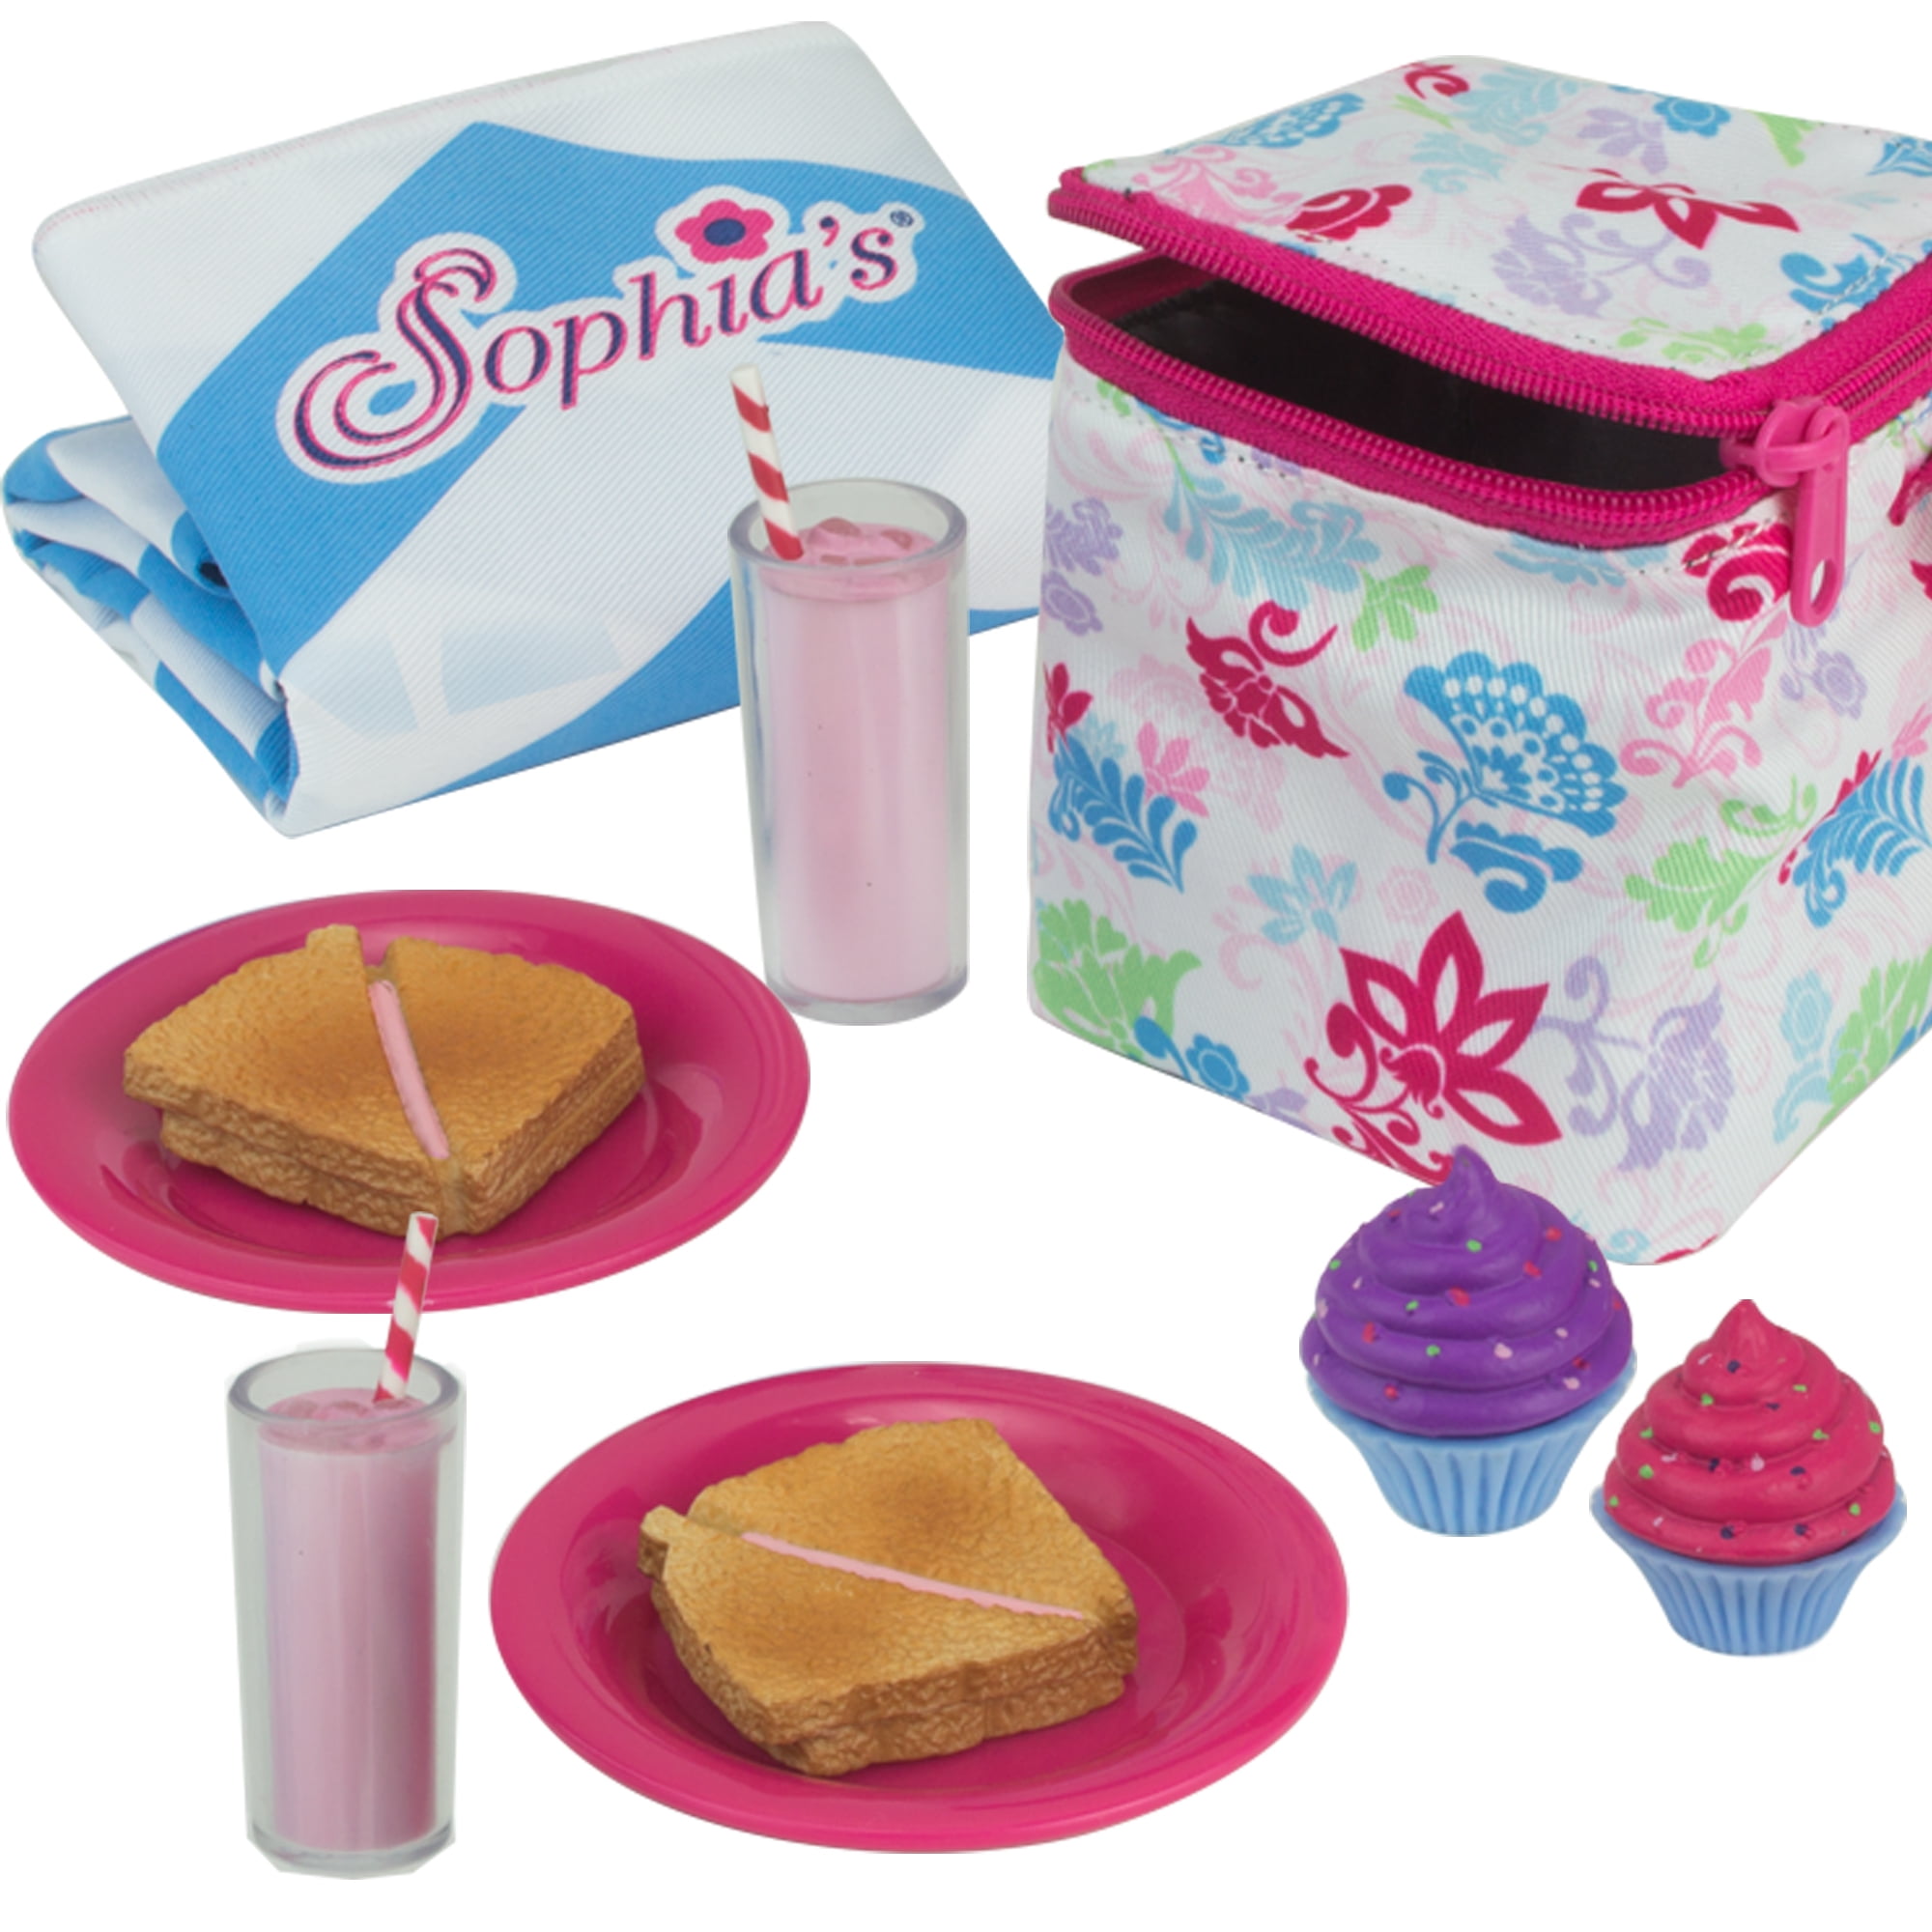 Sophia’s Pretend Baking Accessories 26 Piece Set for 18 Dolls